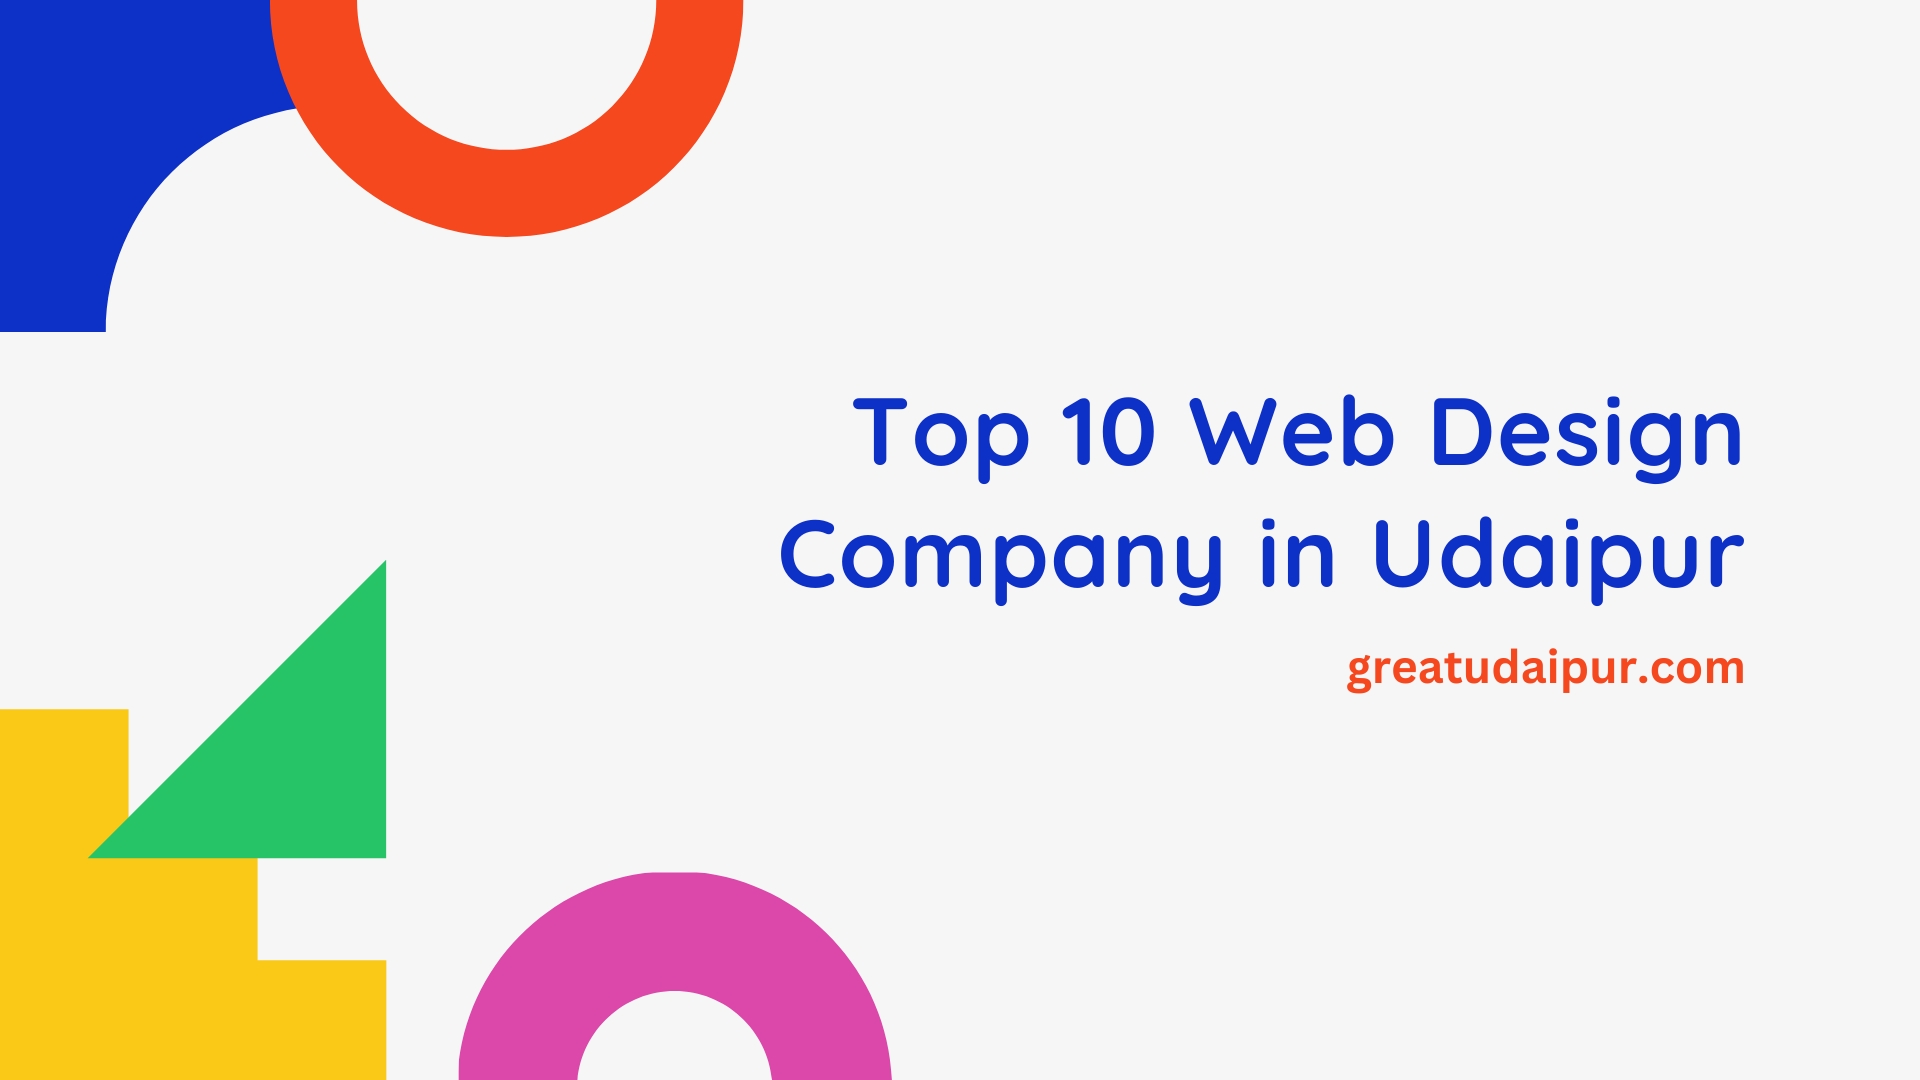 Top 10 Web Design Company in Udaipur